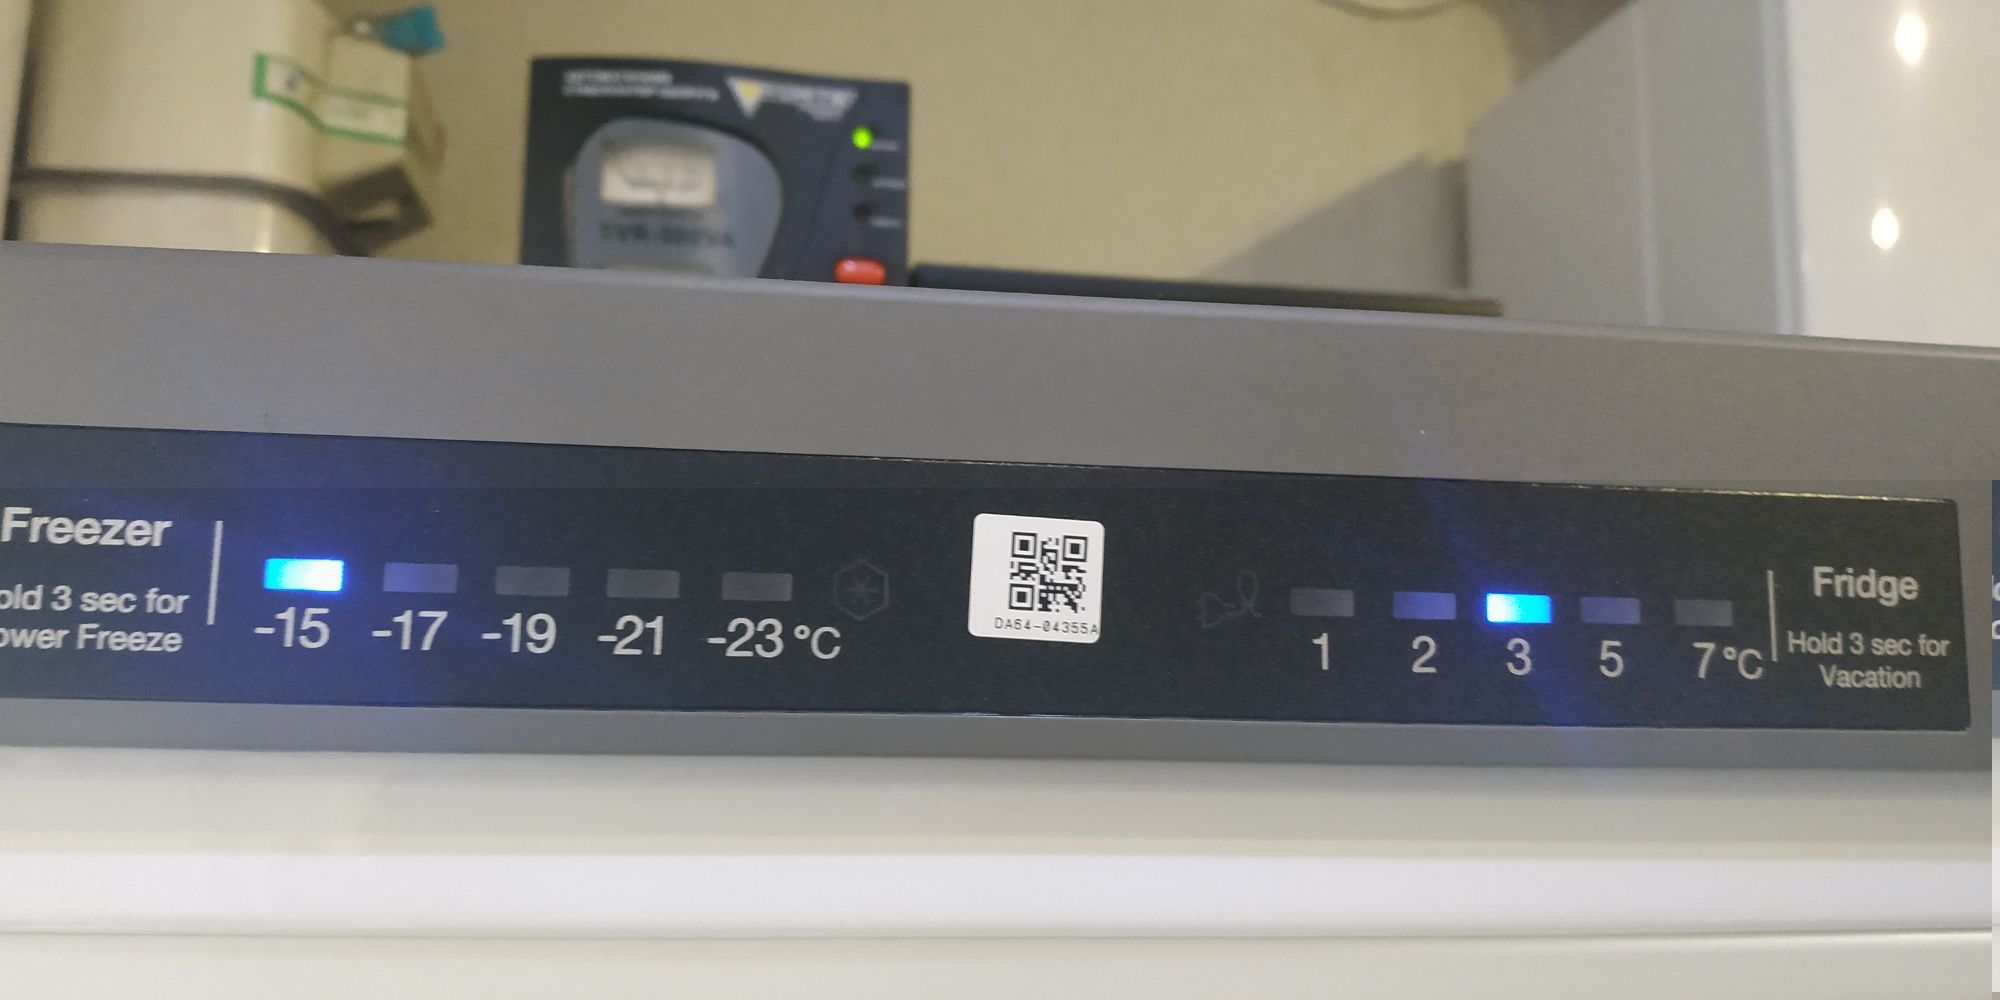 Инверторный холодильник Samsung rb30j3000sa